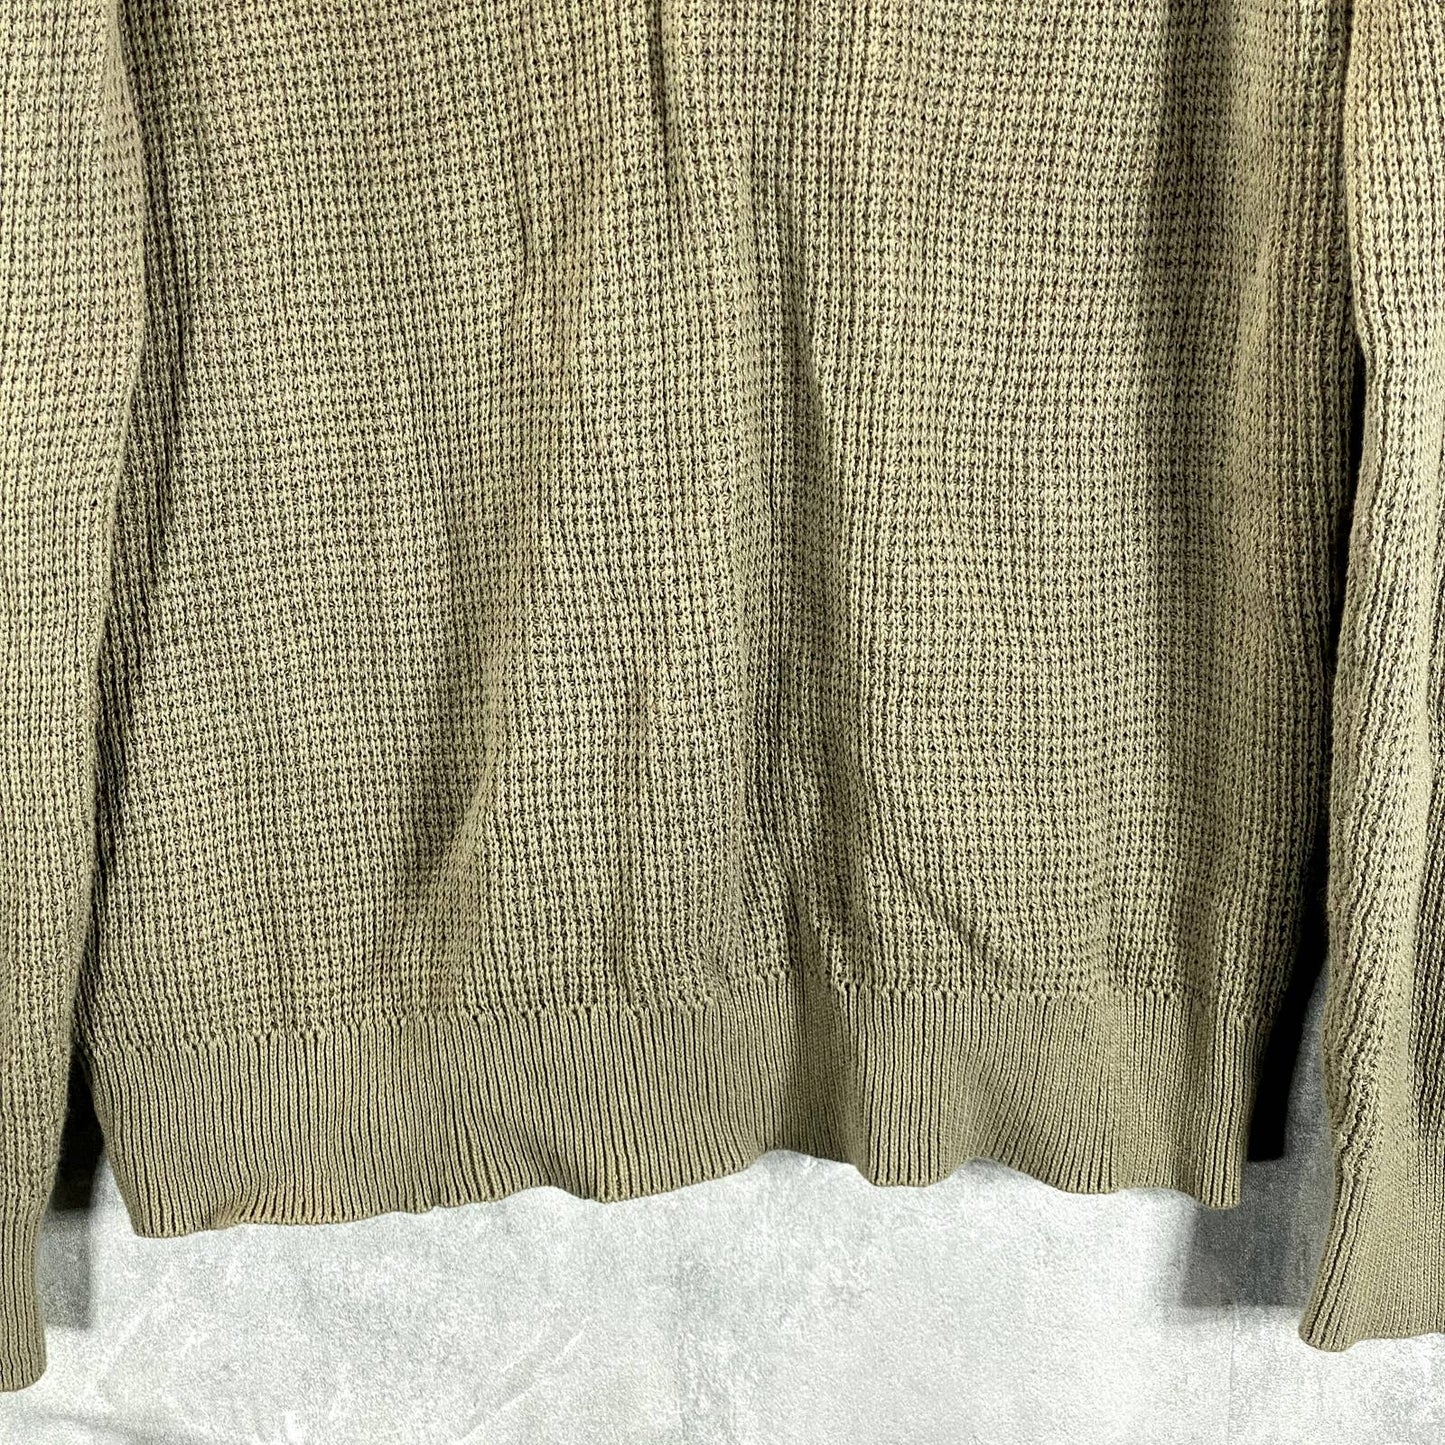 INC INTERNATIONAL Men's Green Tea Leaf Colorblocked Cotton Full-Zip Sweater SZ L